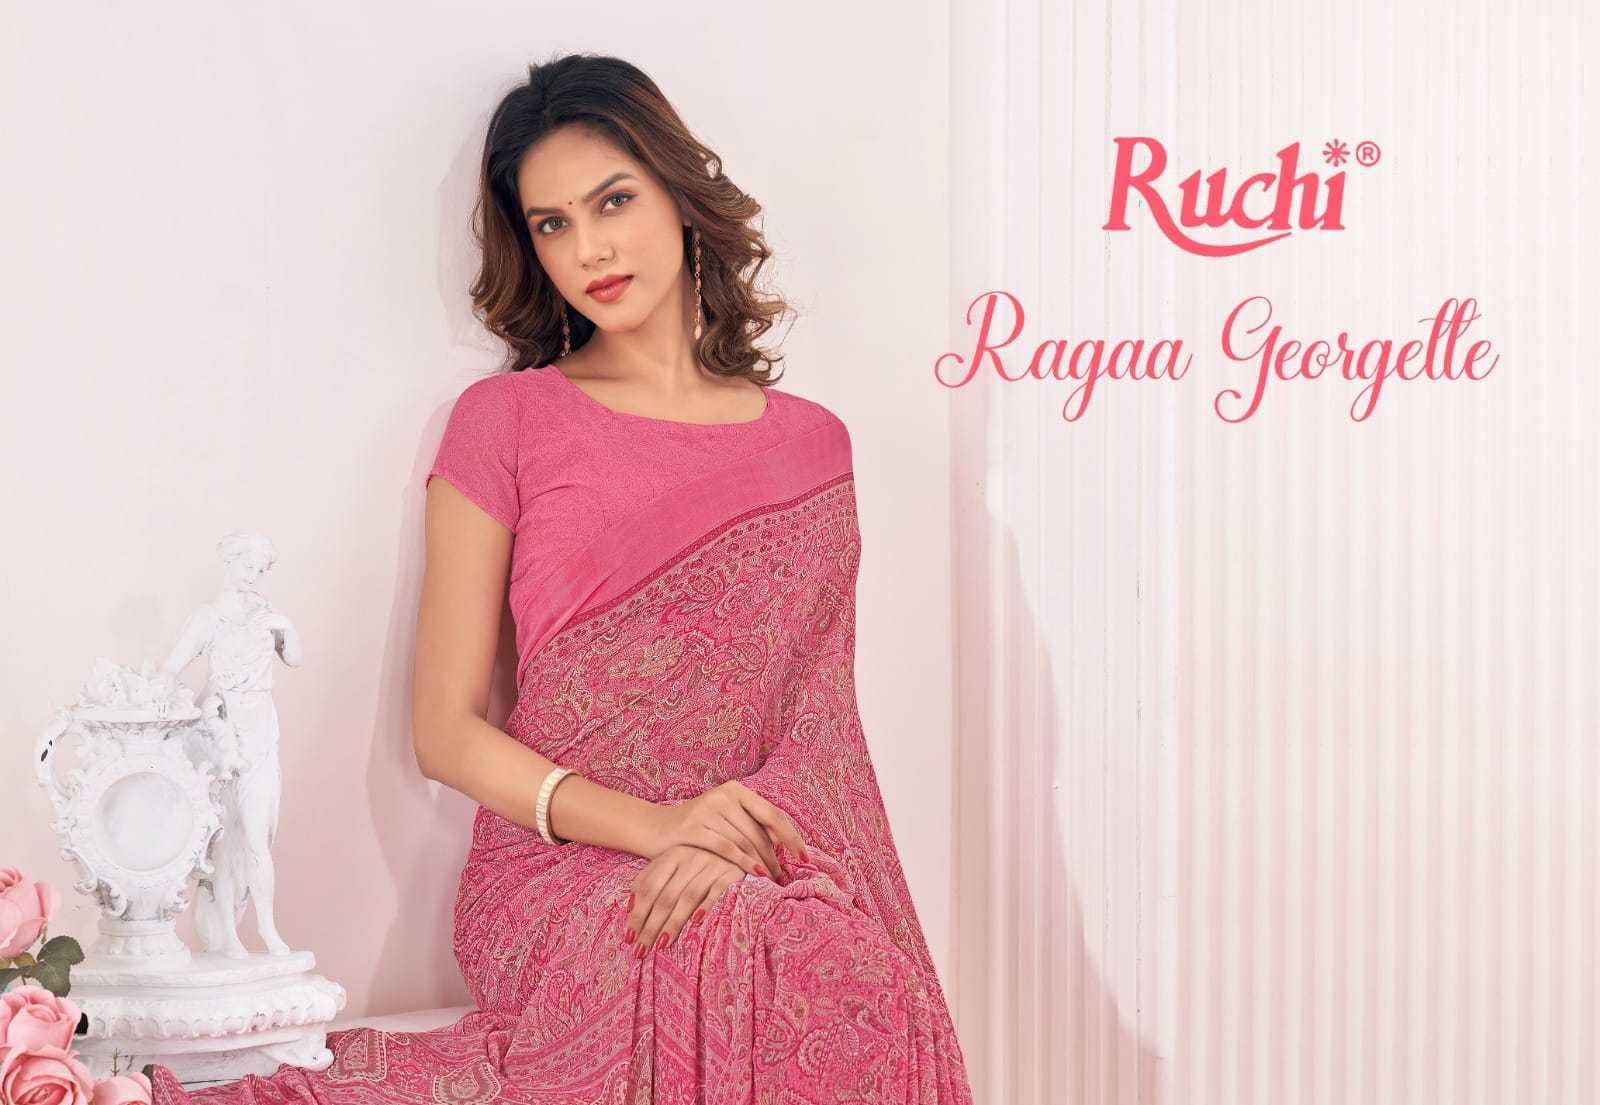 ruchi ragaa georgette vol 6 casual wear beautiful sarees 